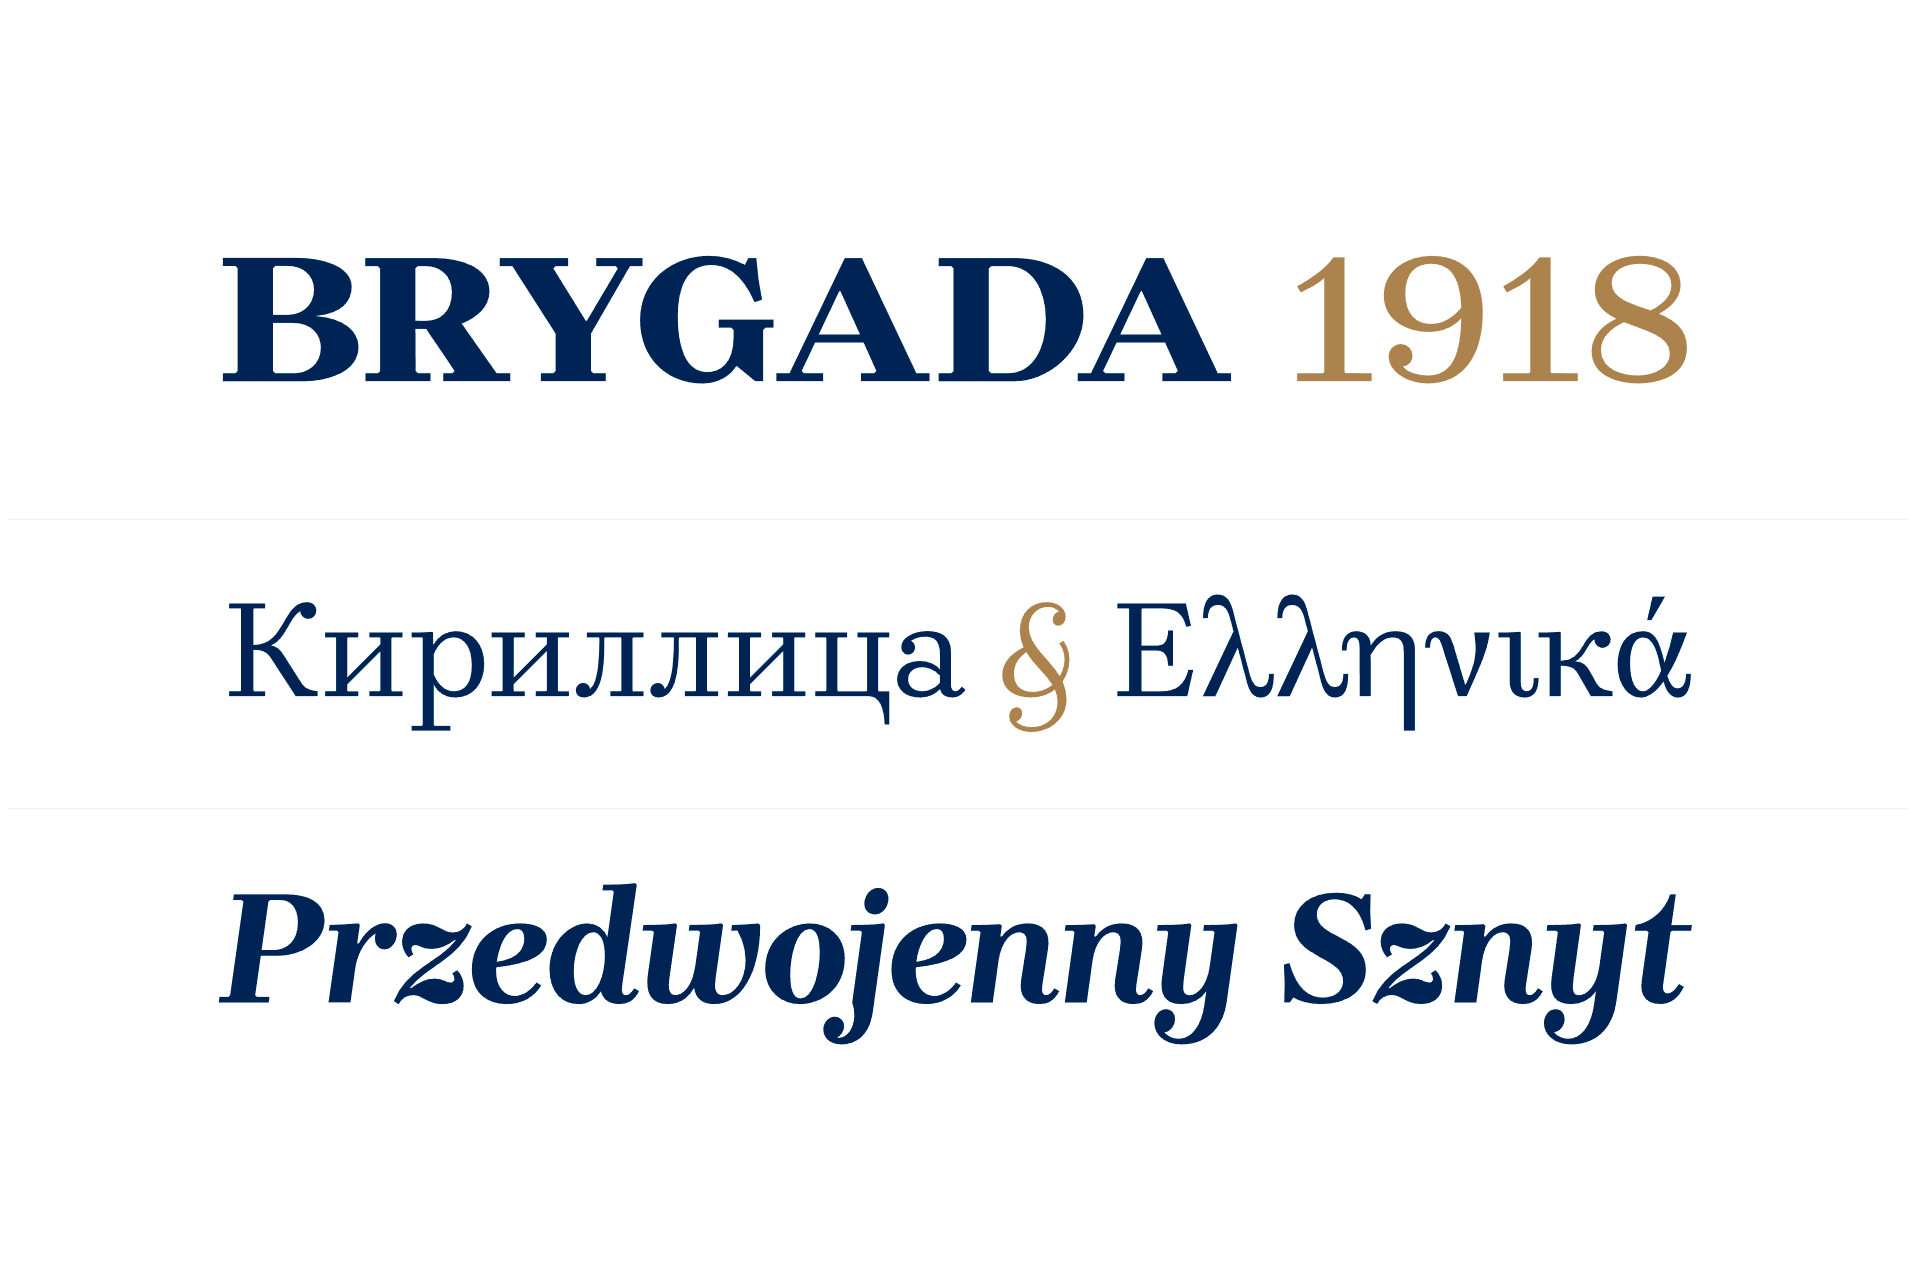 Шрифт tt norms pro. Font Brygada 1918. Шрифт 1918. Шрифт 1918 года. Красивые шрифты фигма на русском.